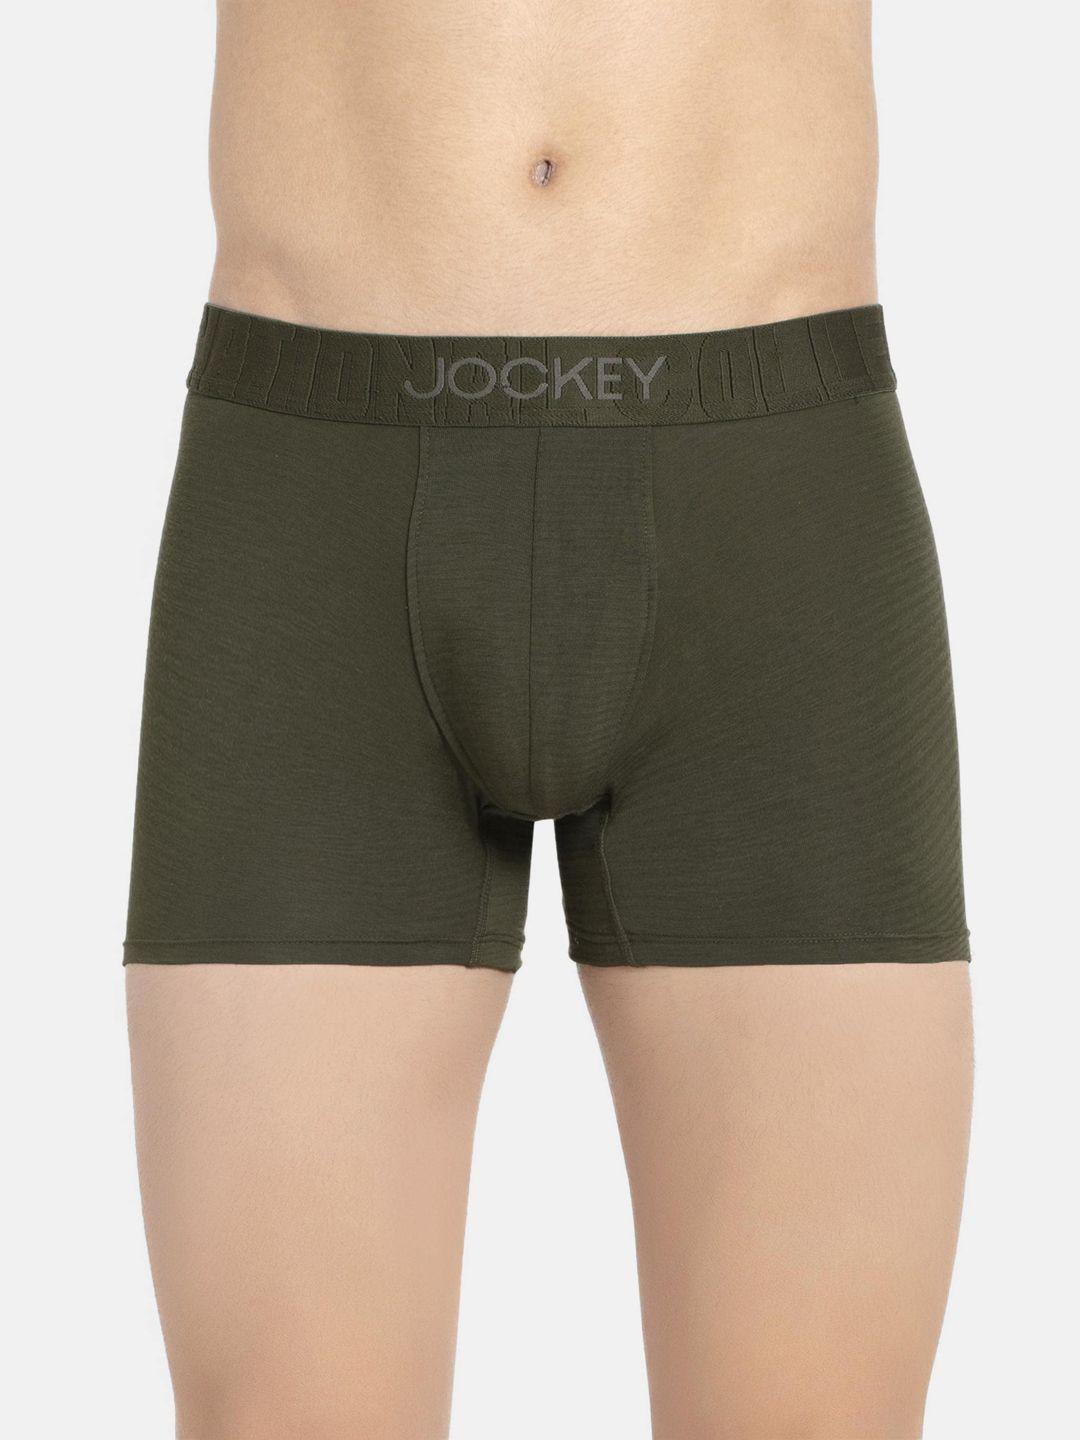 jockey-international-collection-men-olive-green-solid-pima-cotton-trunks-ic32